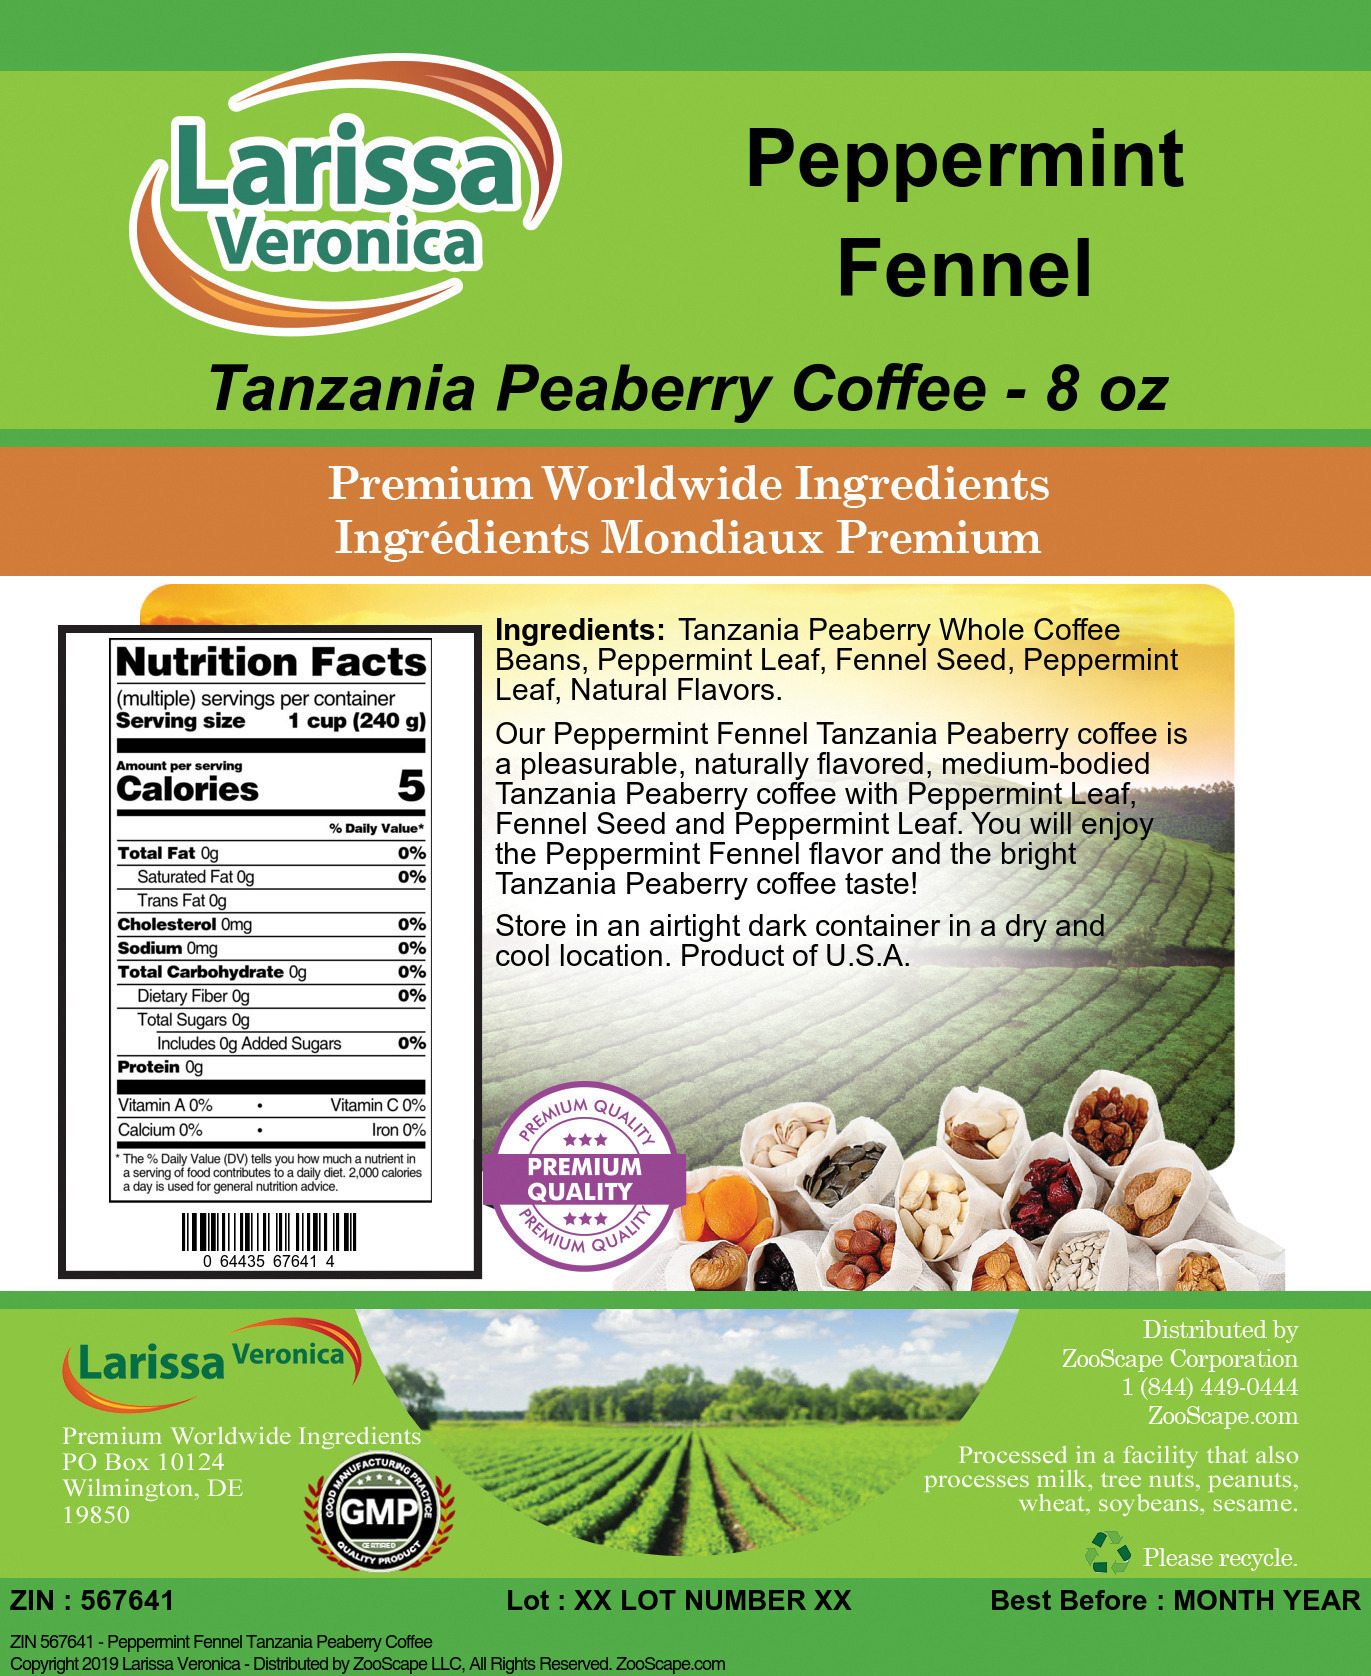 Peppermint Fennel Tanzania Peaberry Coffee - Label